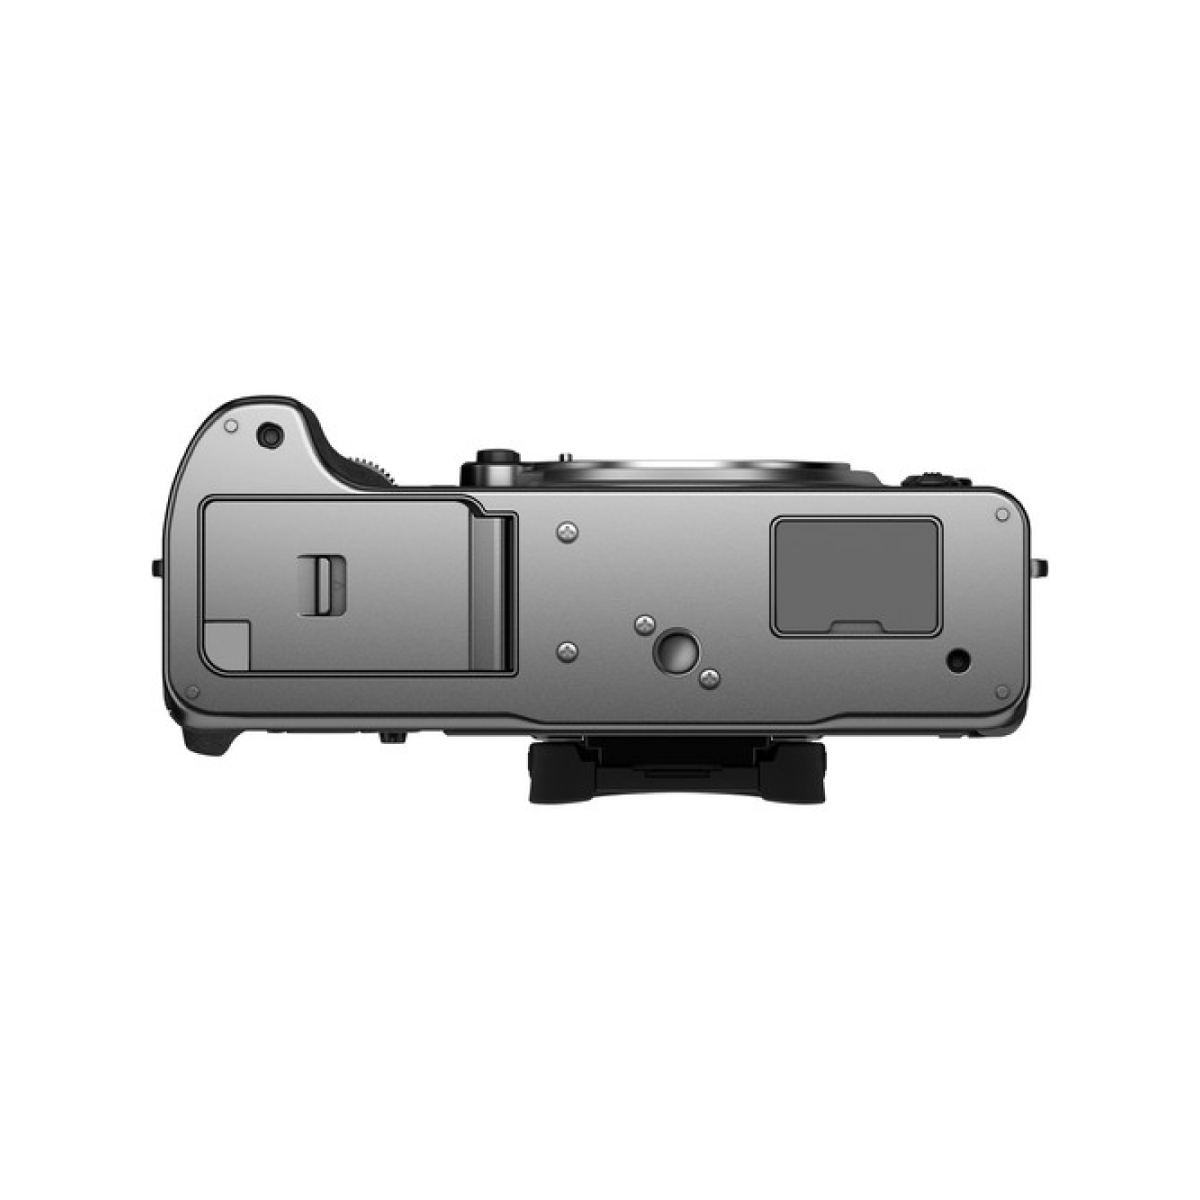 Fujifilm X-T4 26MP Mirrorless Camera Body with XF18-55mm Lens – Silver (9)